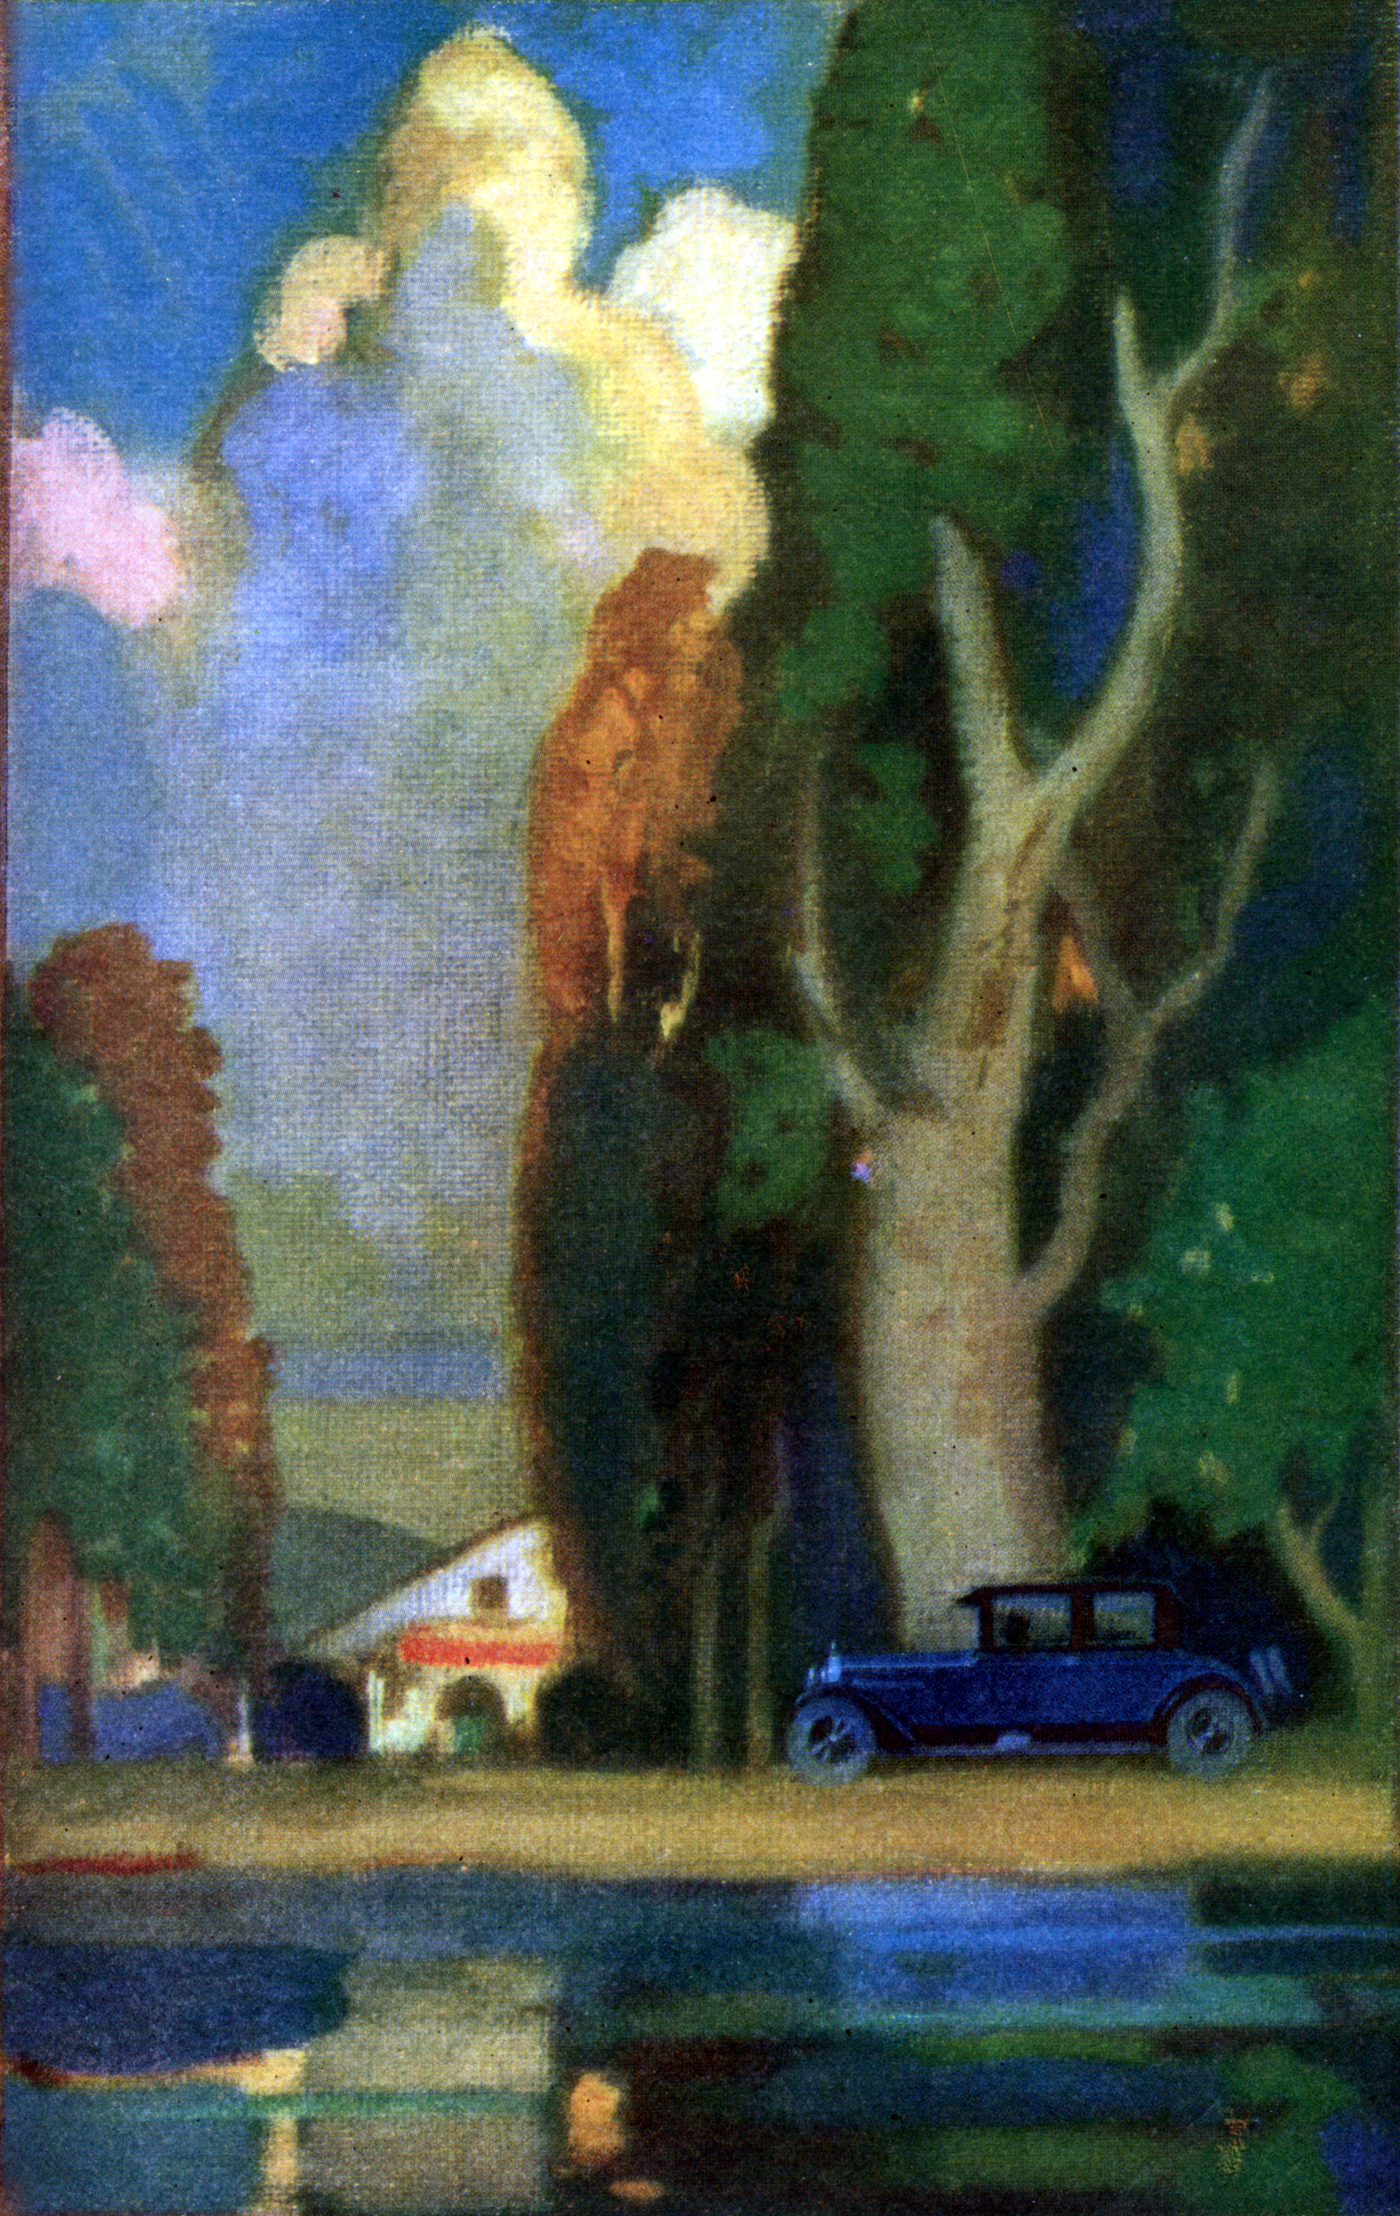 House, auto, trees, pond - 1926